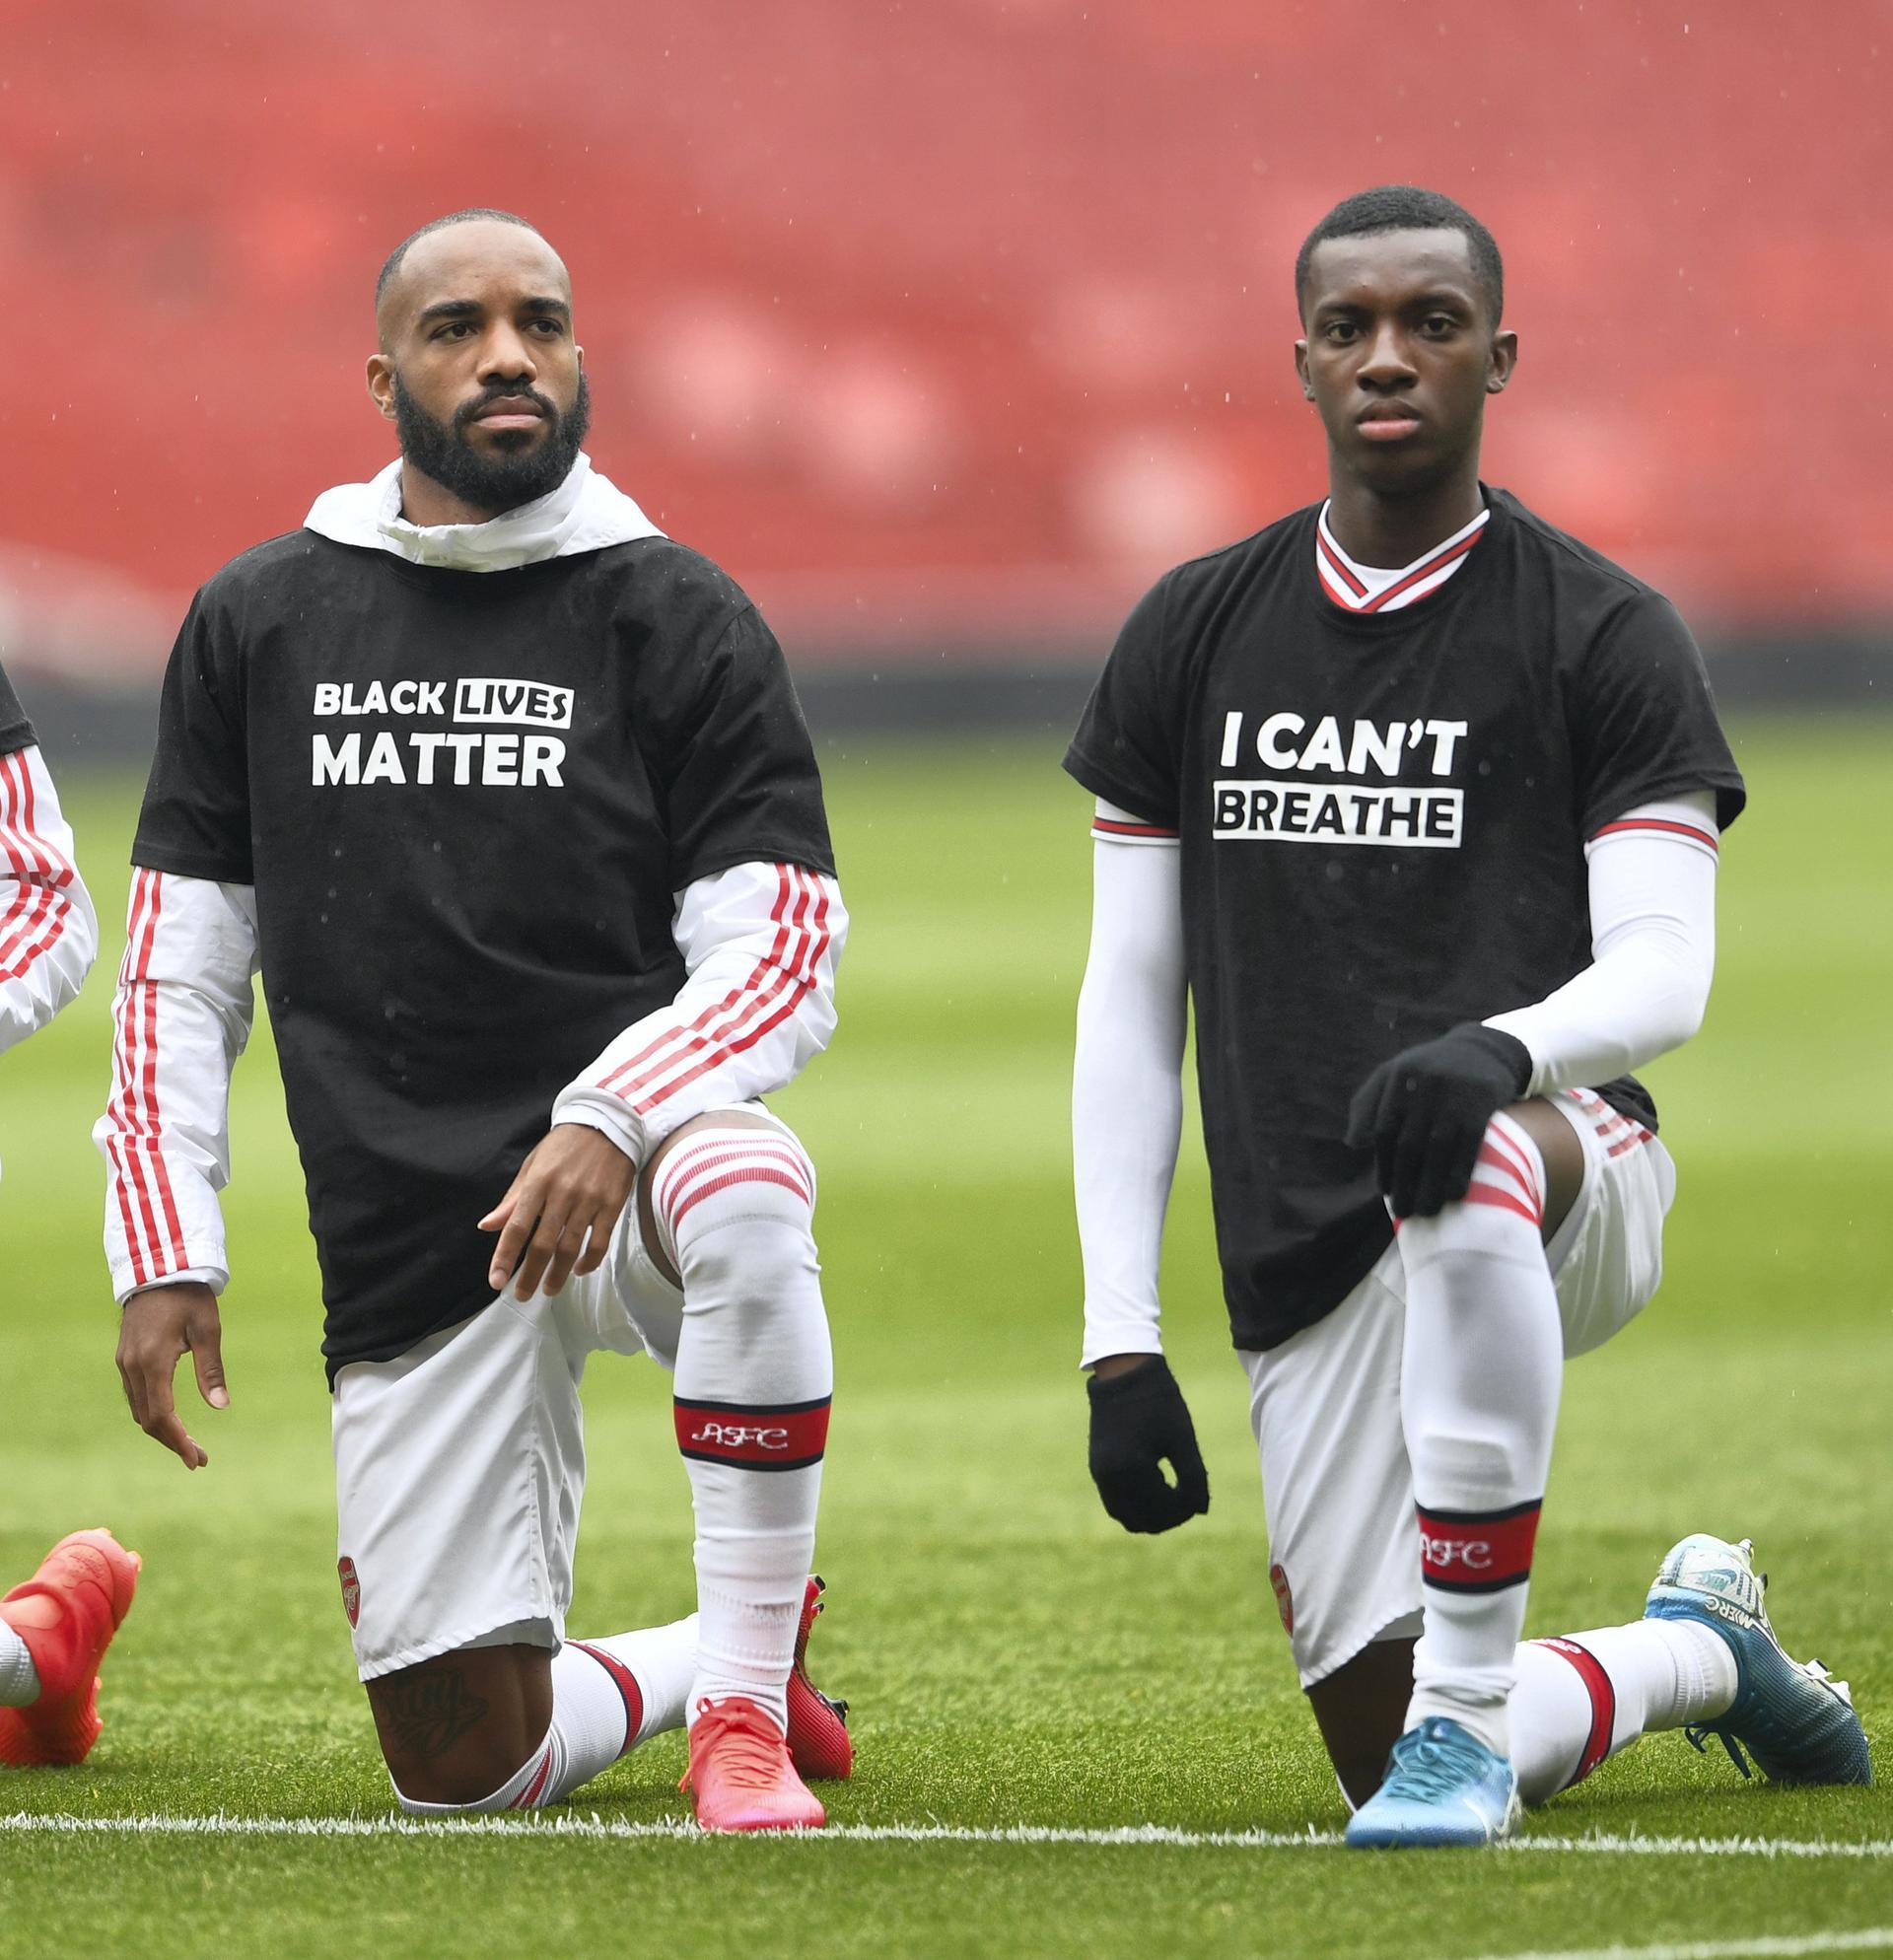 Premier League Teams Black Lives Matter and NHS Logos on Jerseys